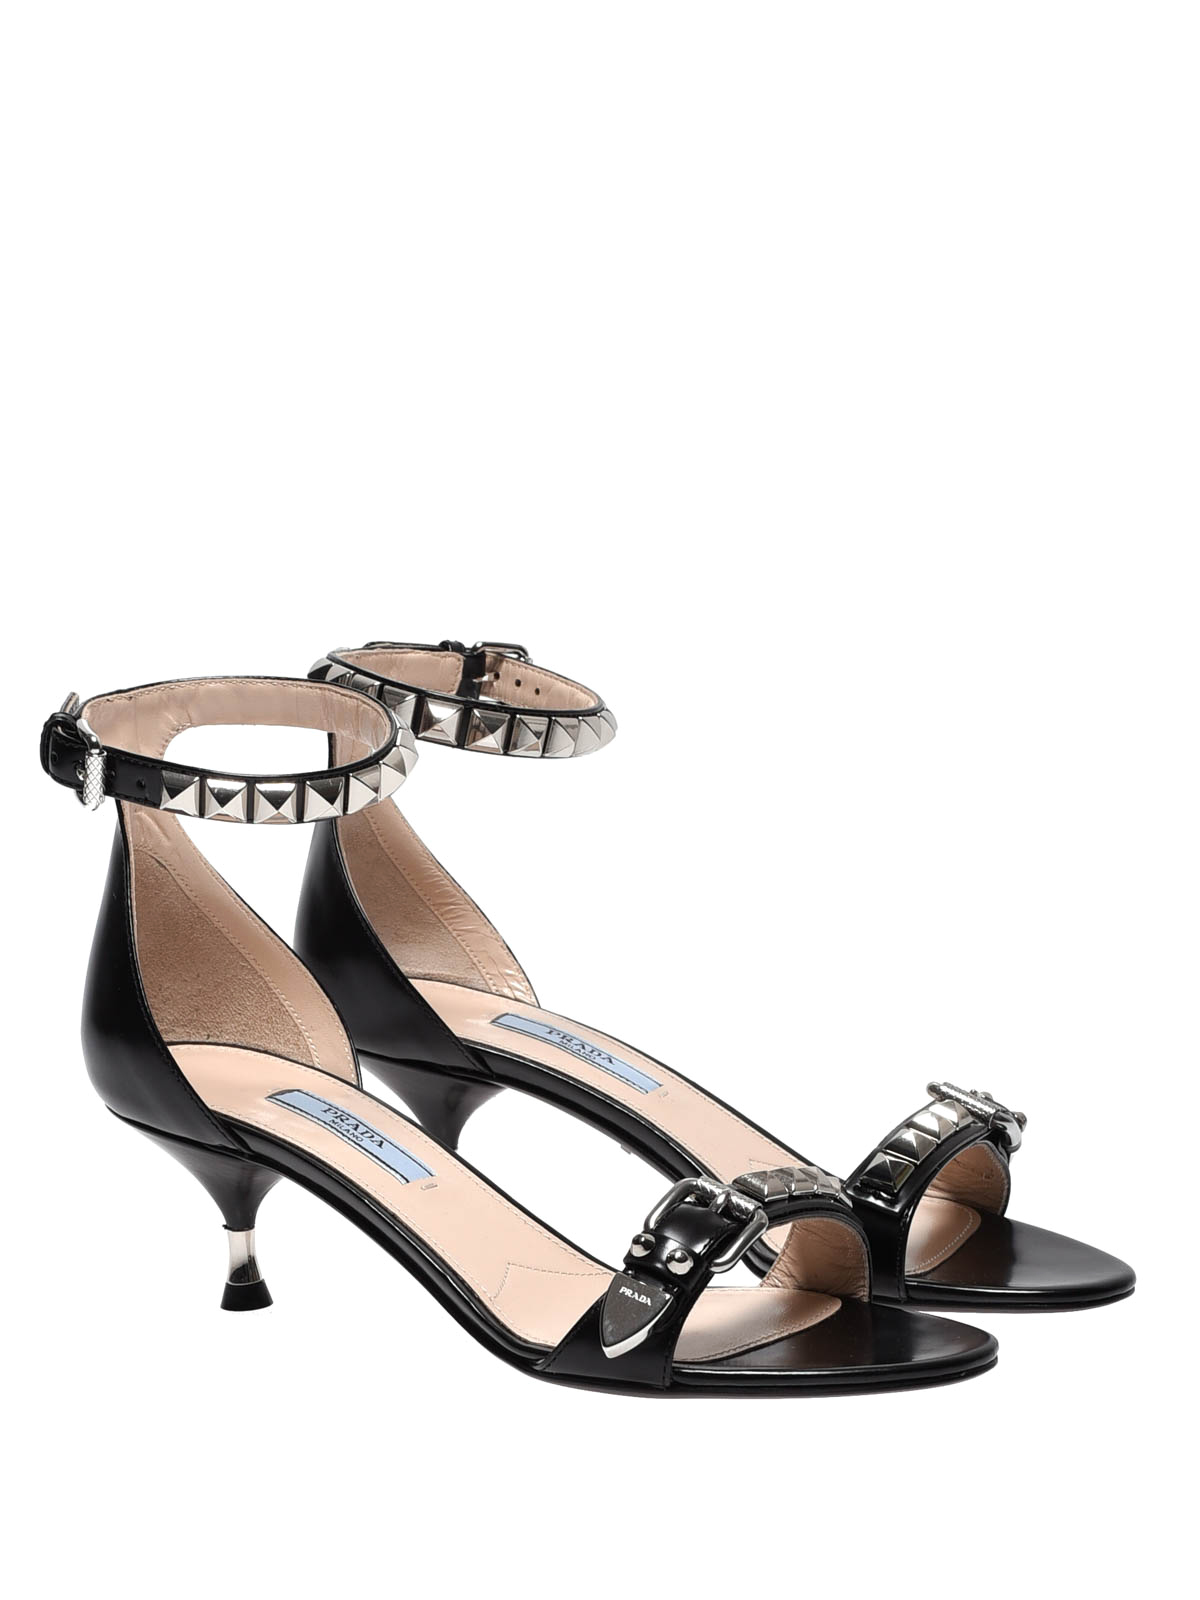 Prada - Studded leather sandals 